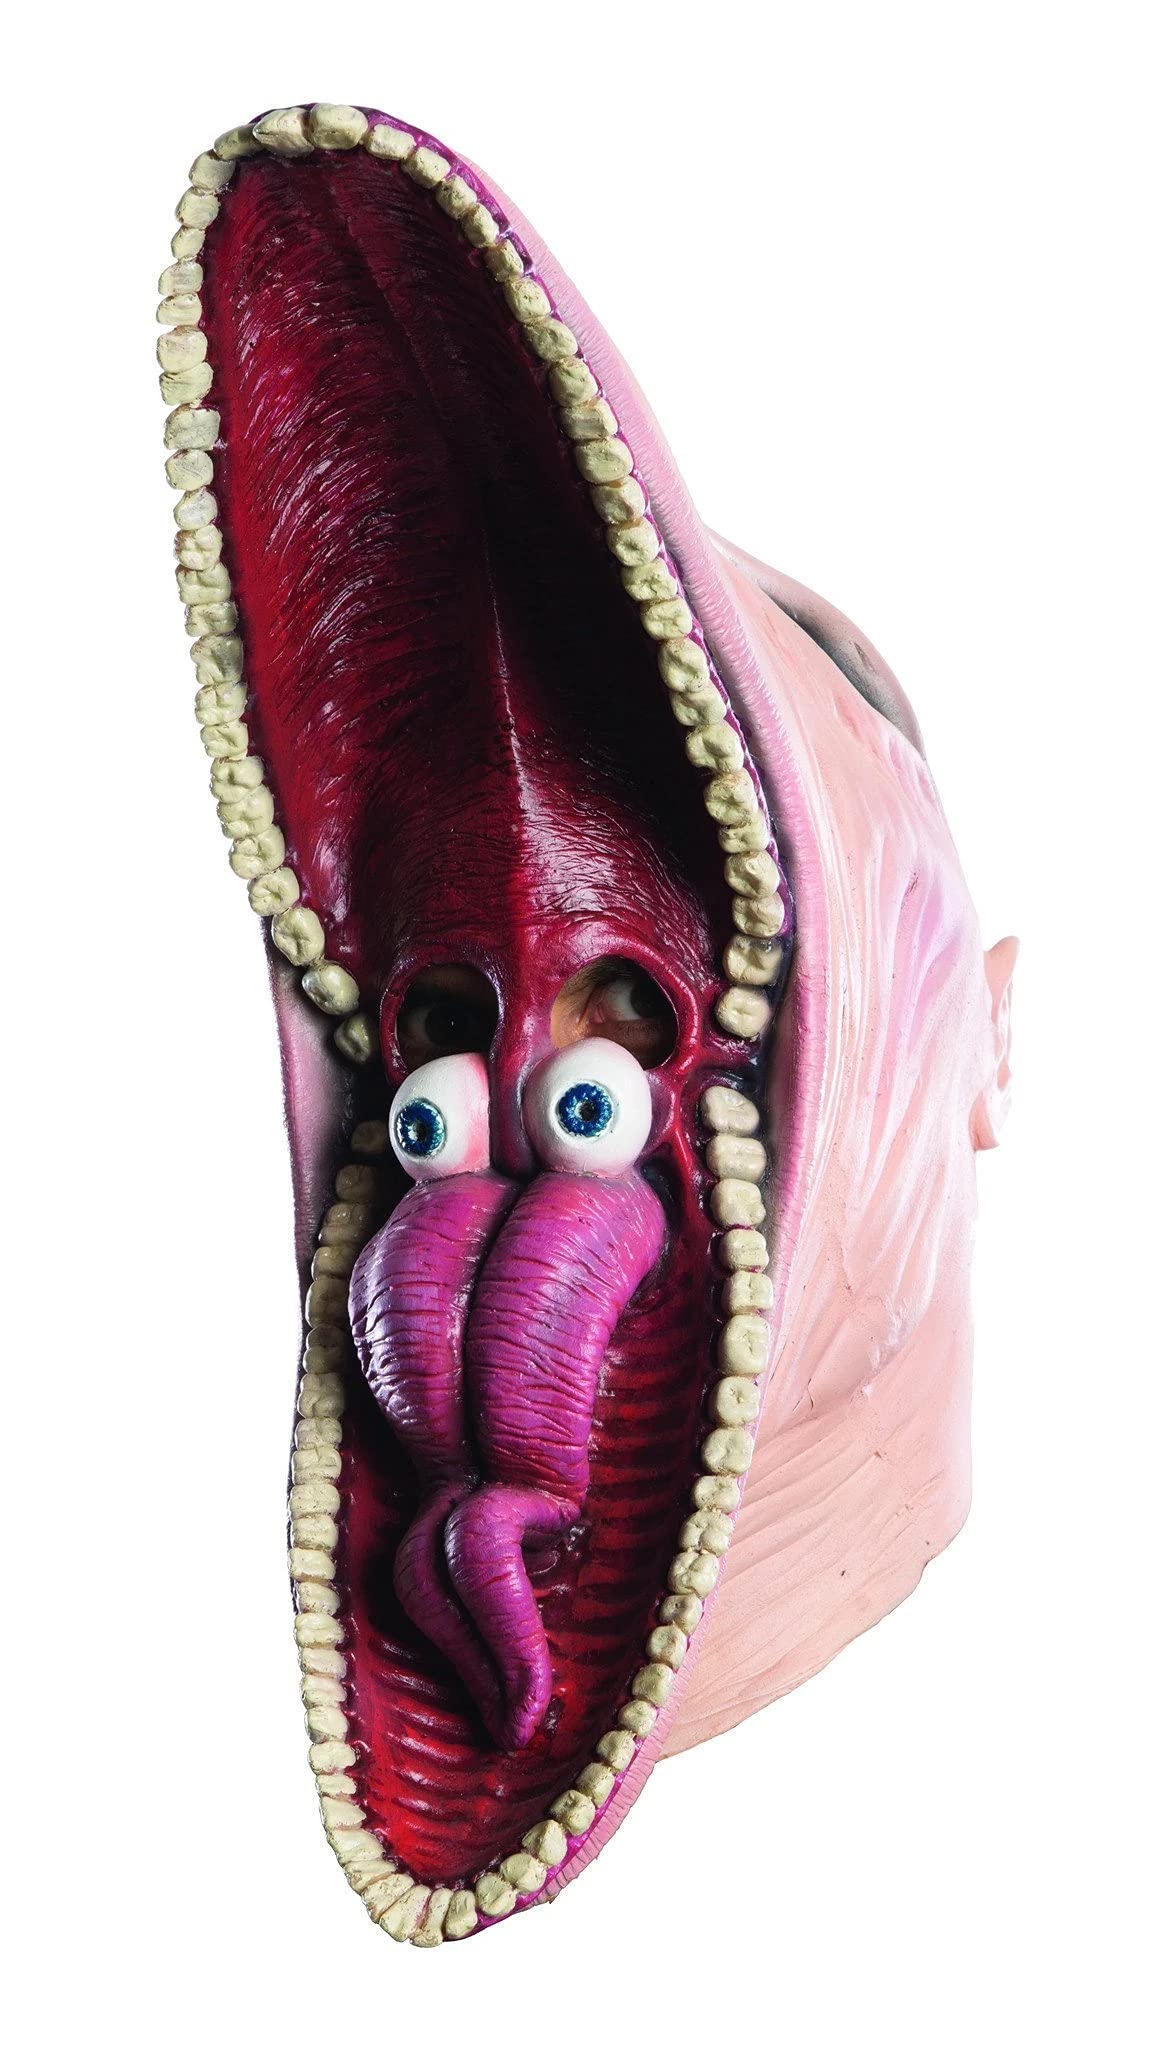 Rubie's unisex adult Beetlejuice Barbara Costume Mask, As Shown, One Size US